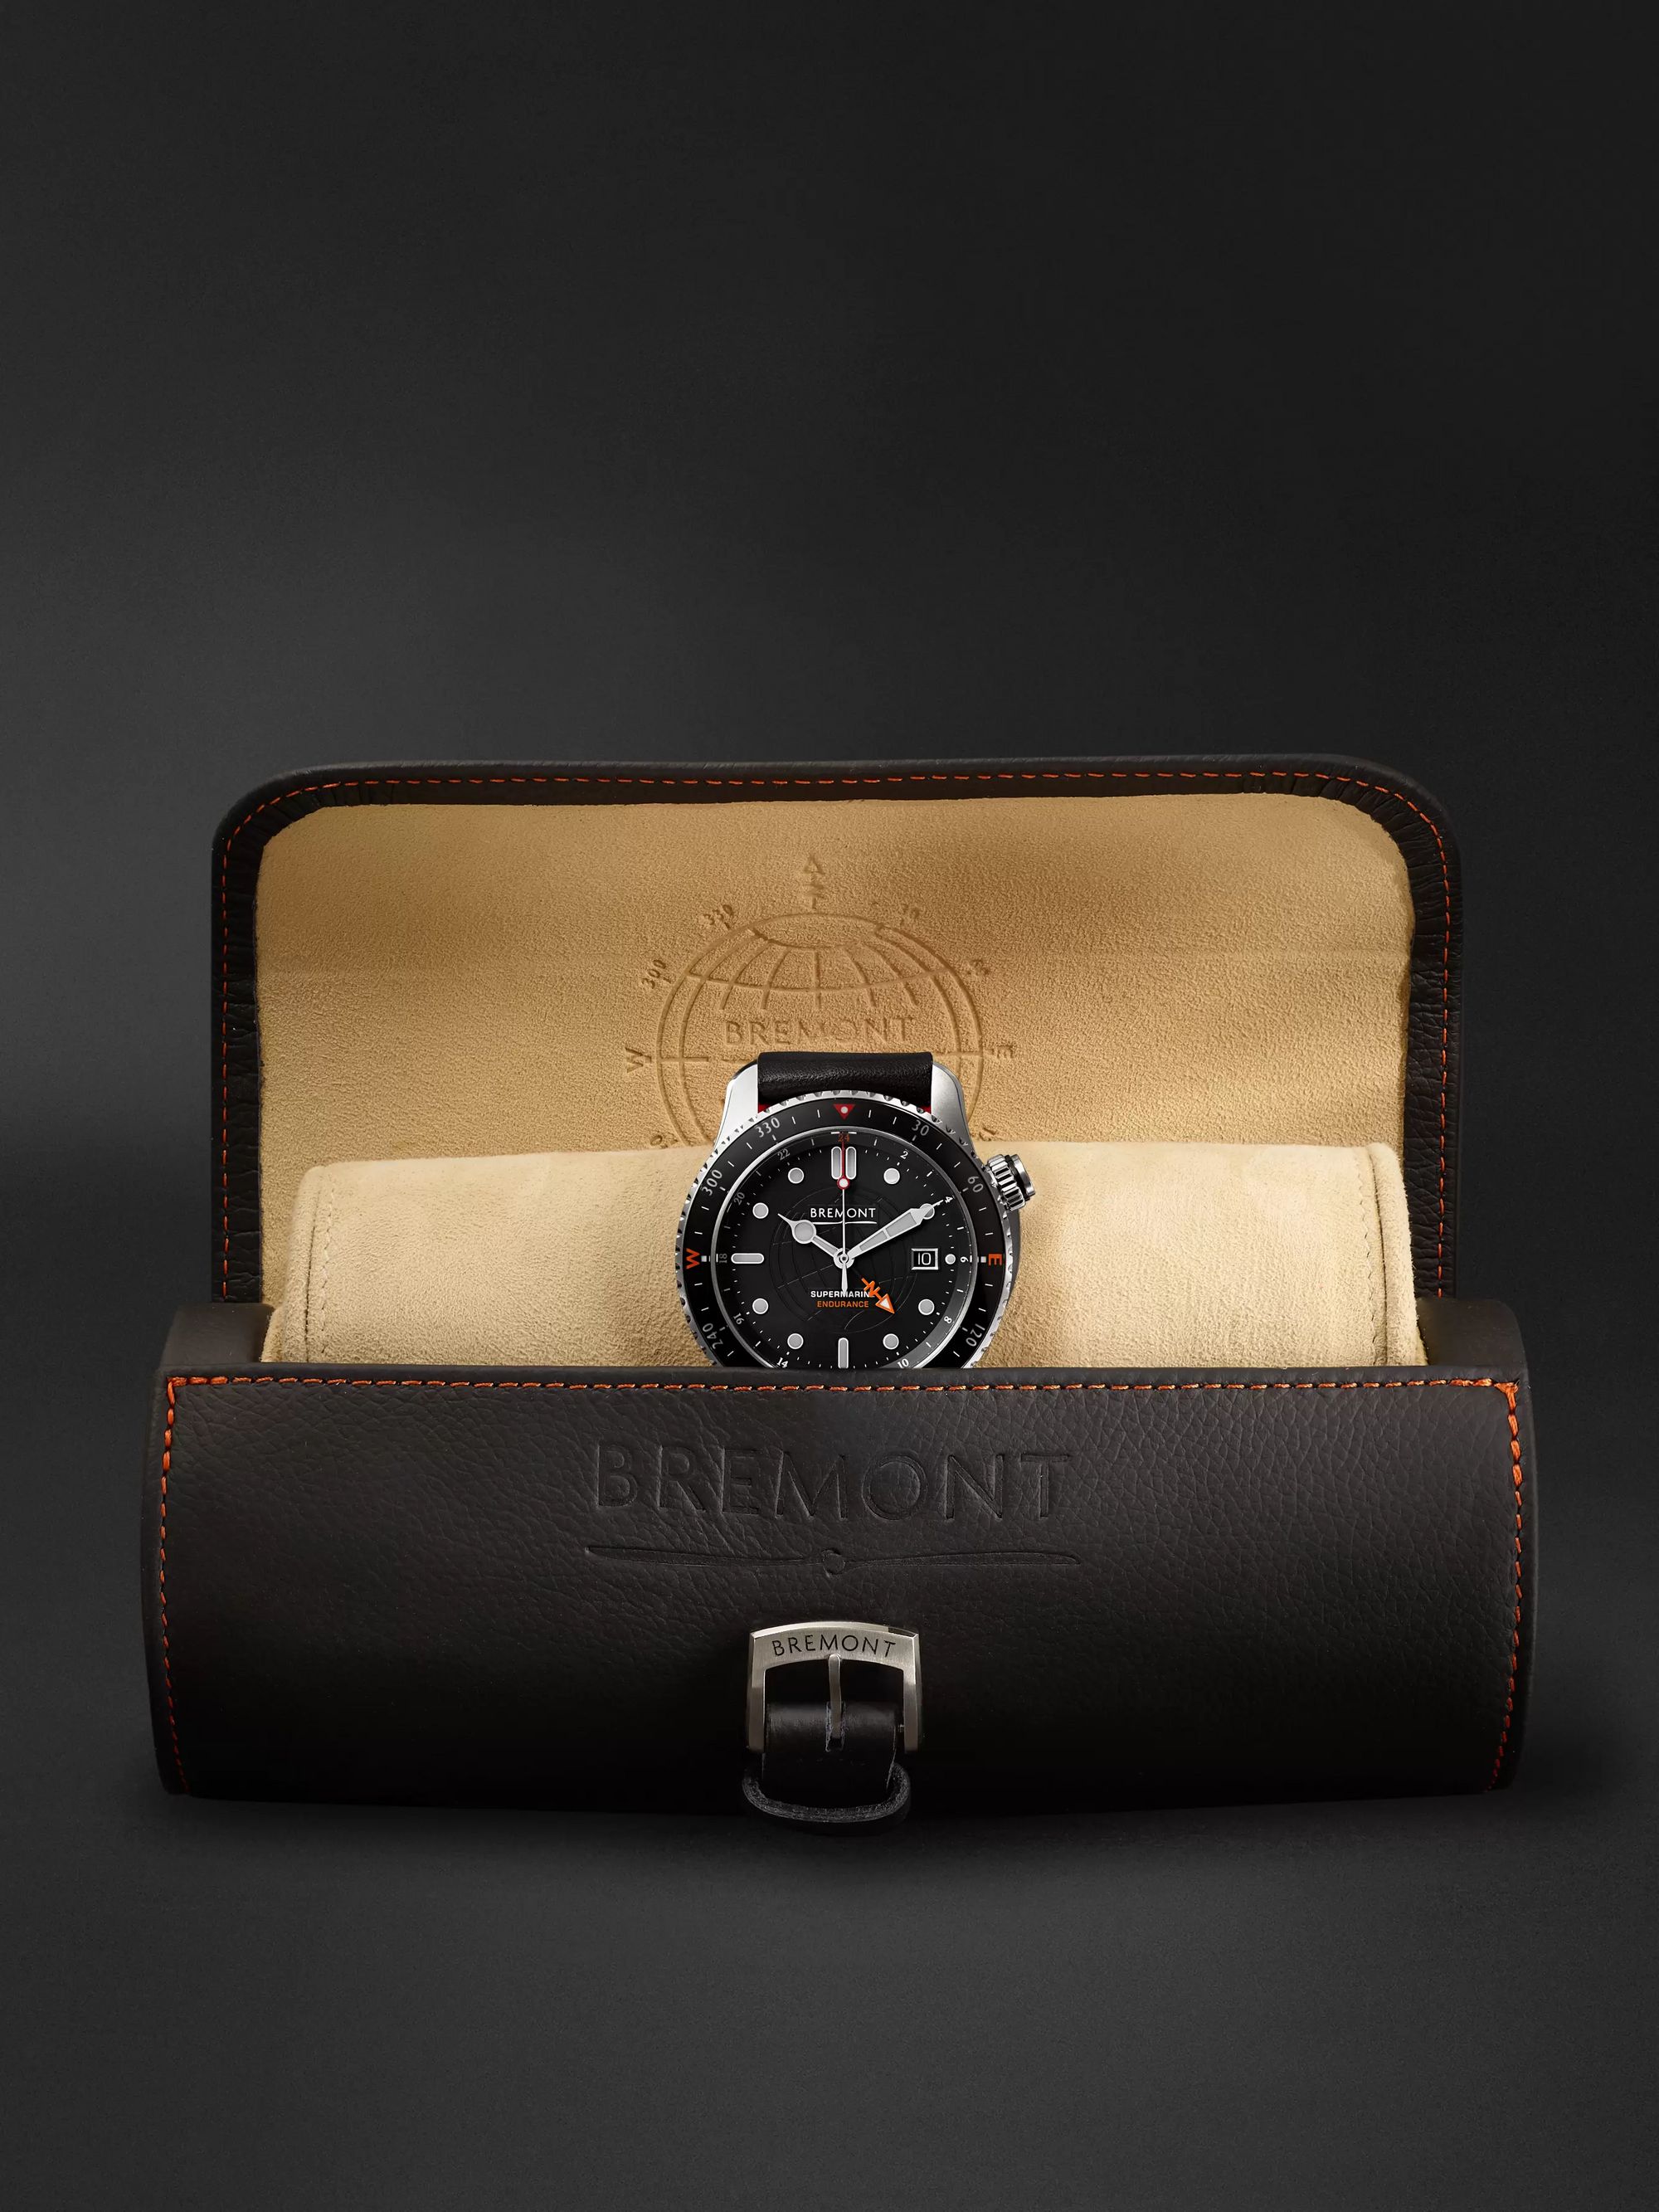 BREMONT Supermarine Endurance Limited Edition Automatic GMT 43mm Titanium and Nylon Watch, Ref. No. S500/ENDURANCE